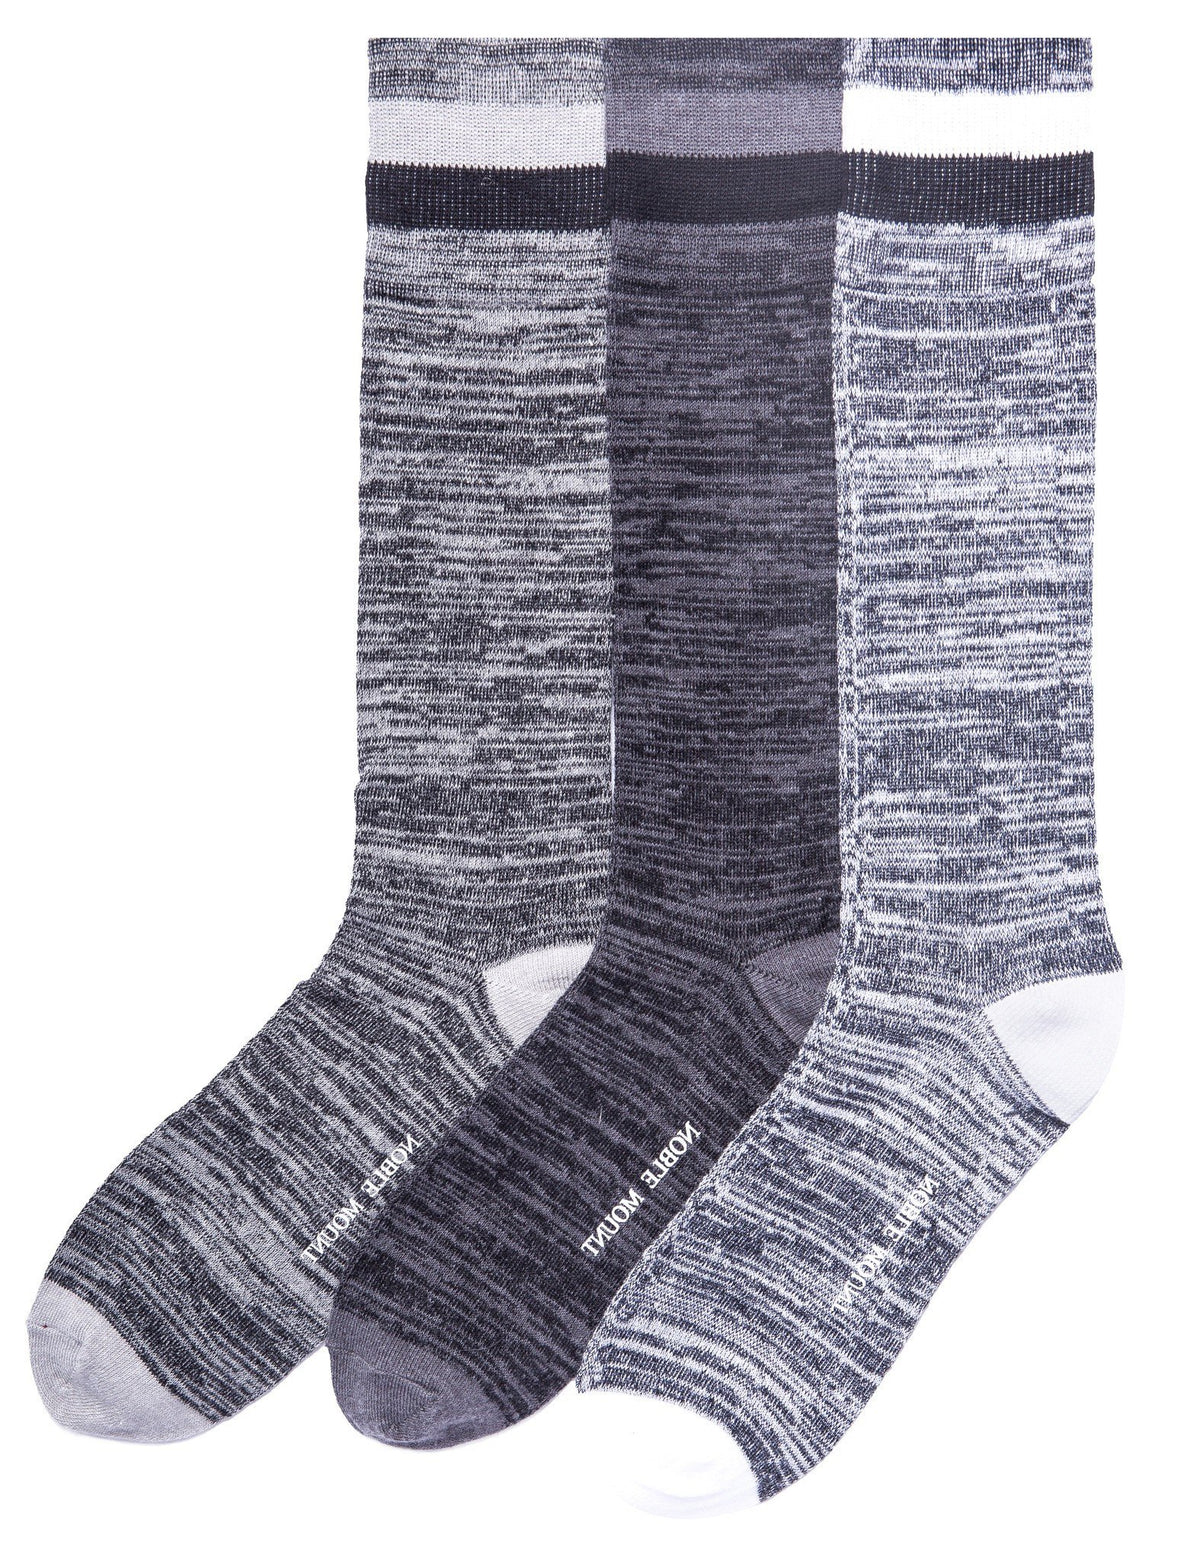 Men's 100% Acrylic Soft Marled Dress Socks 3-Pack - Set A4